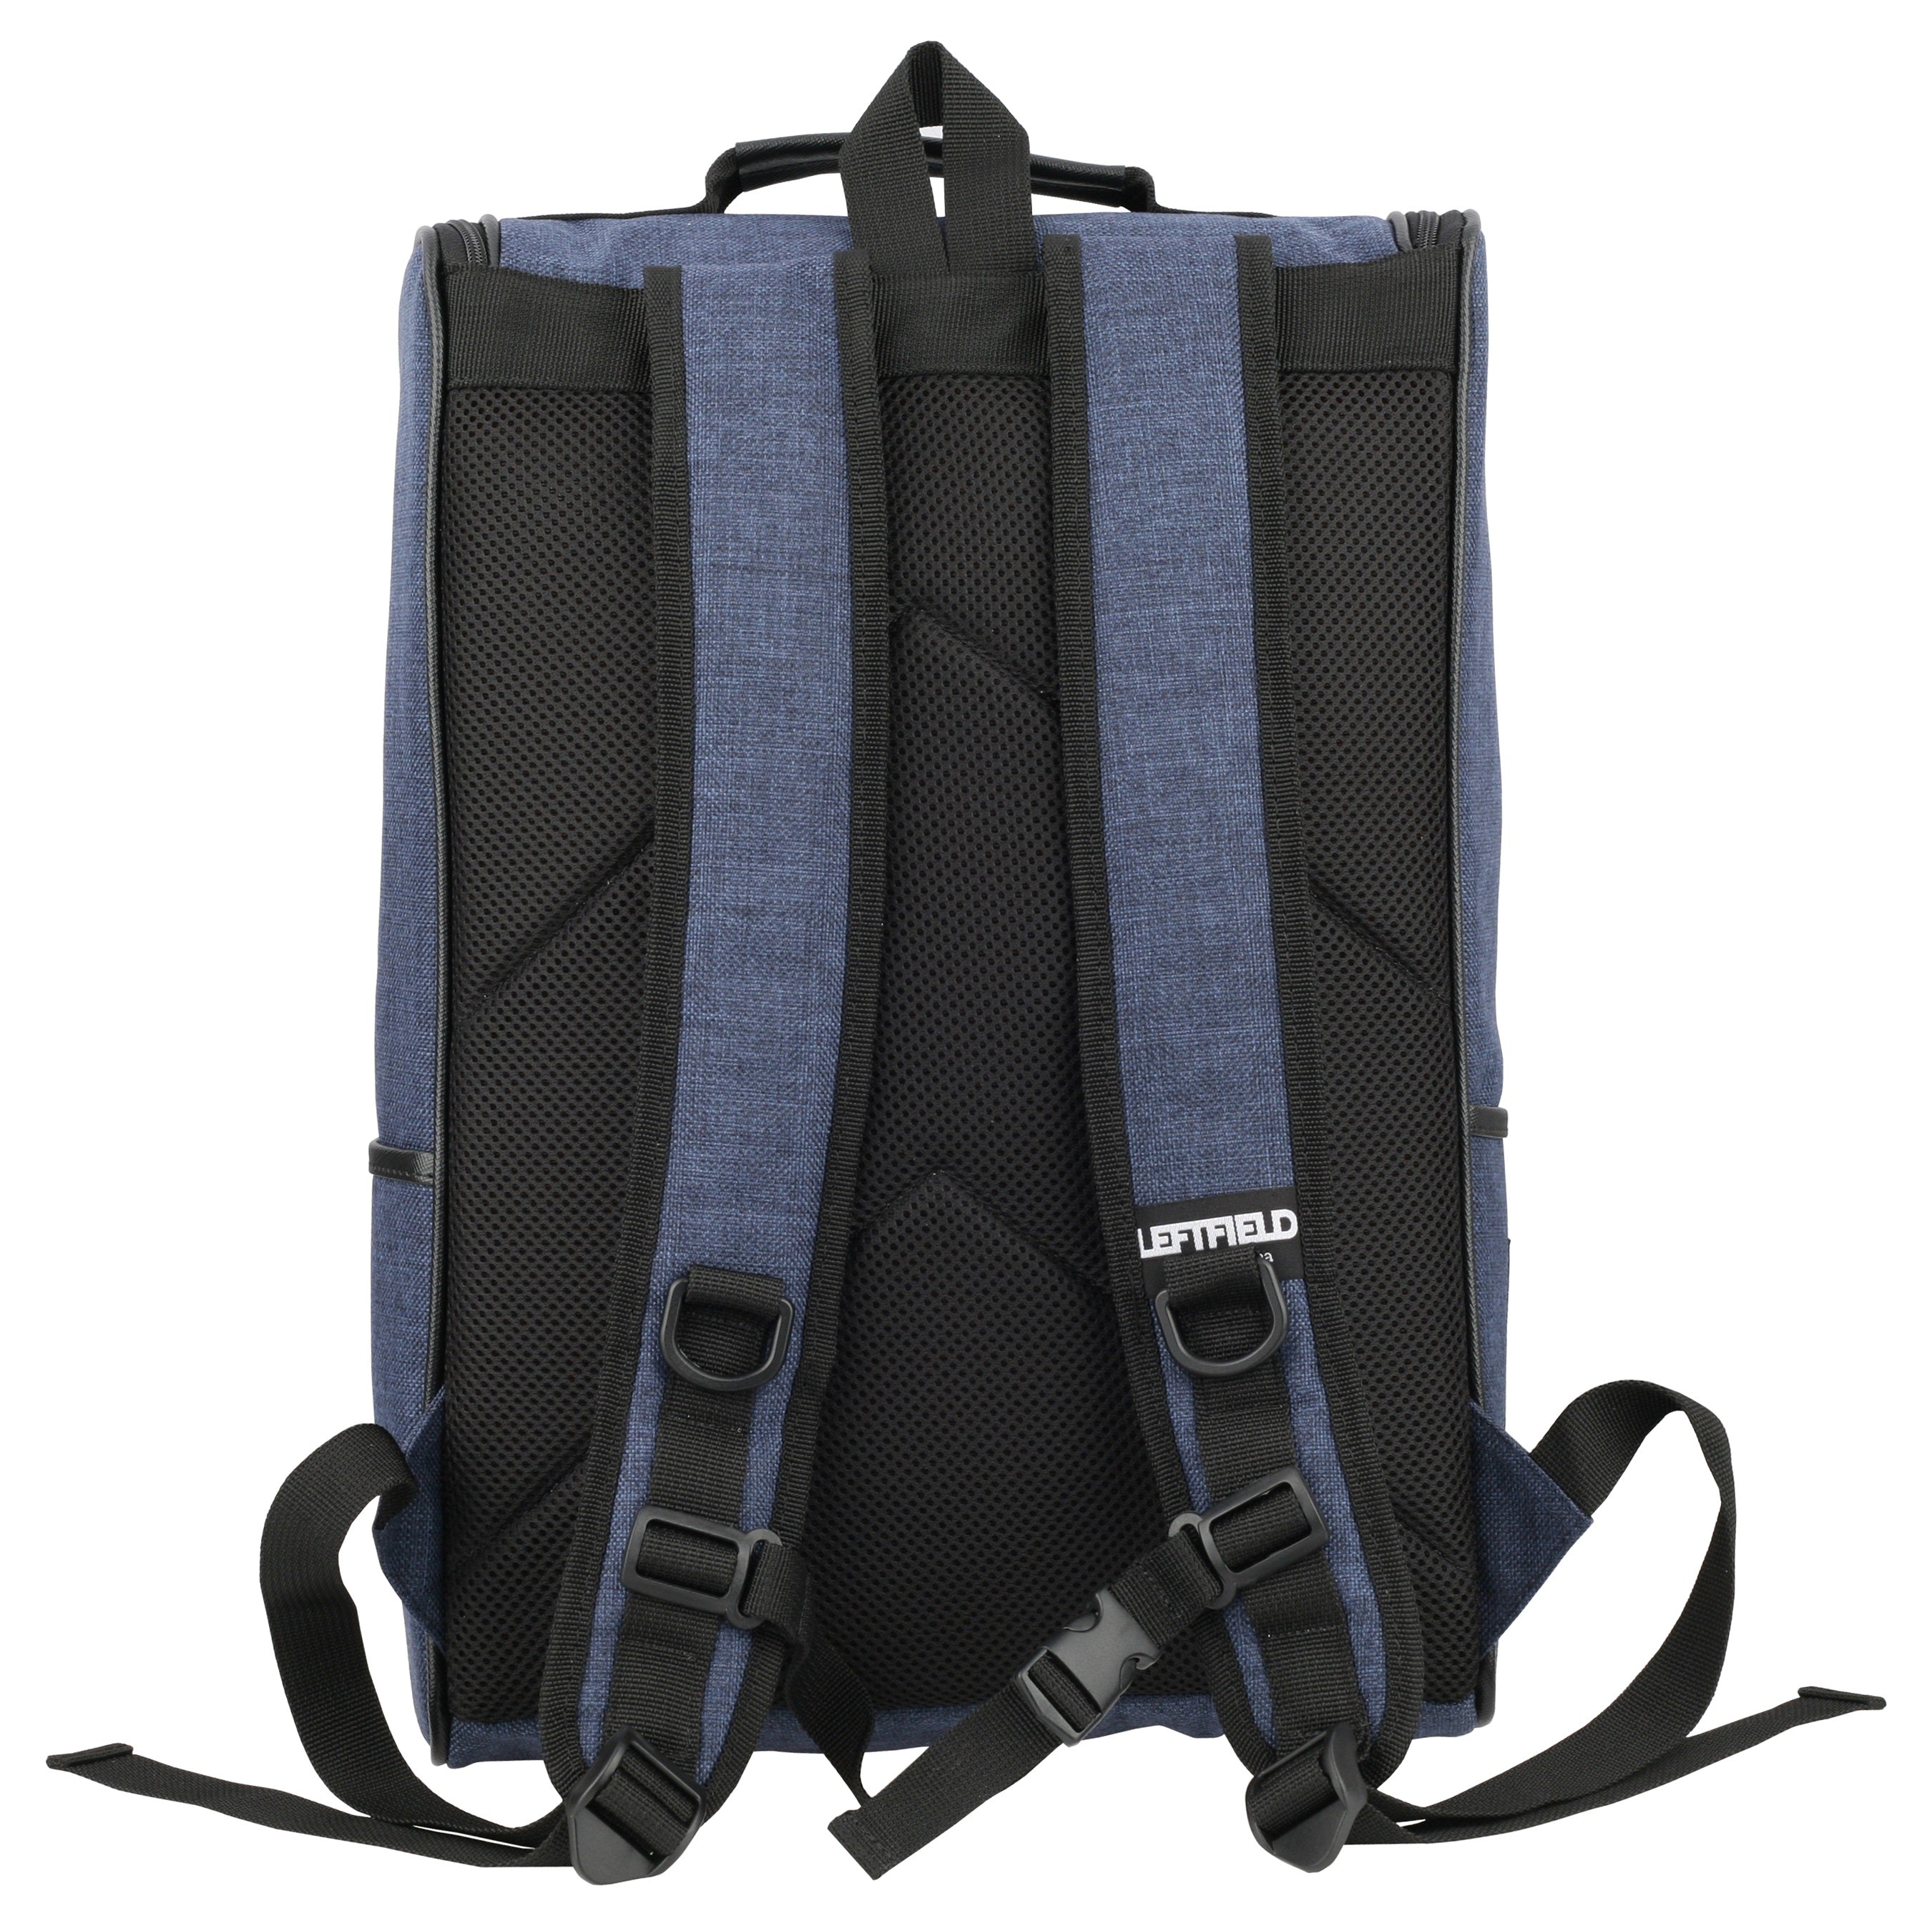 Navy Blue Casual Canvas Laptop Rucksacks Backpacks